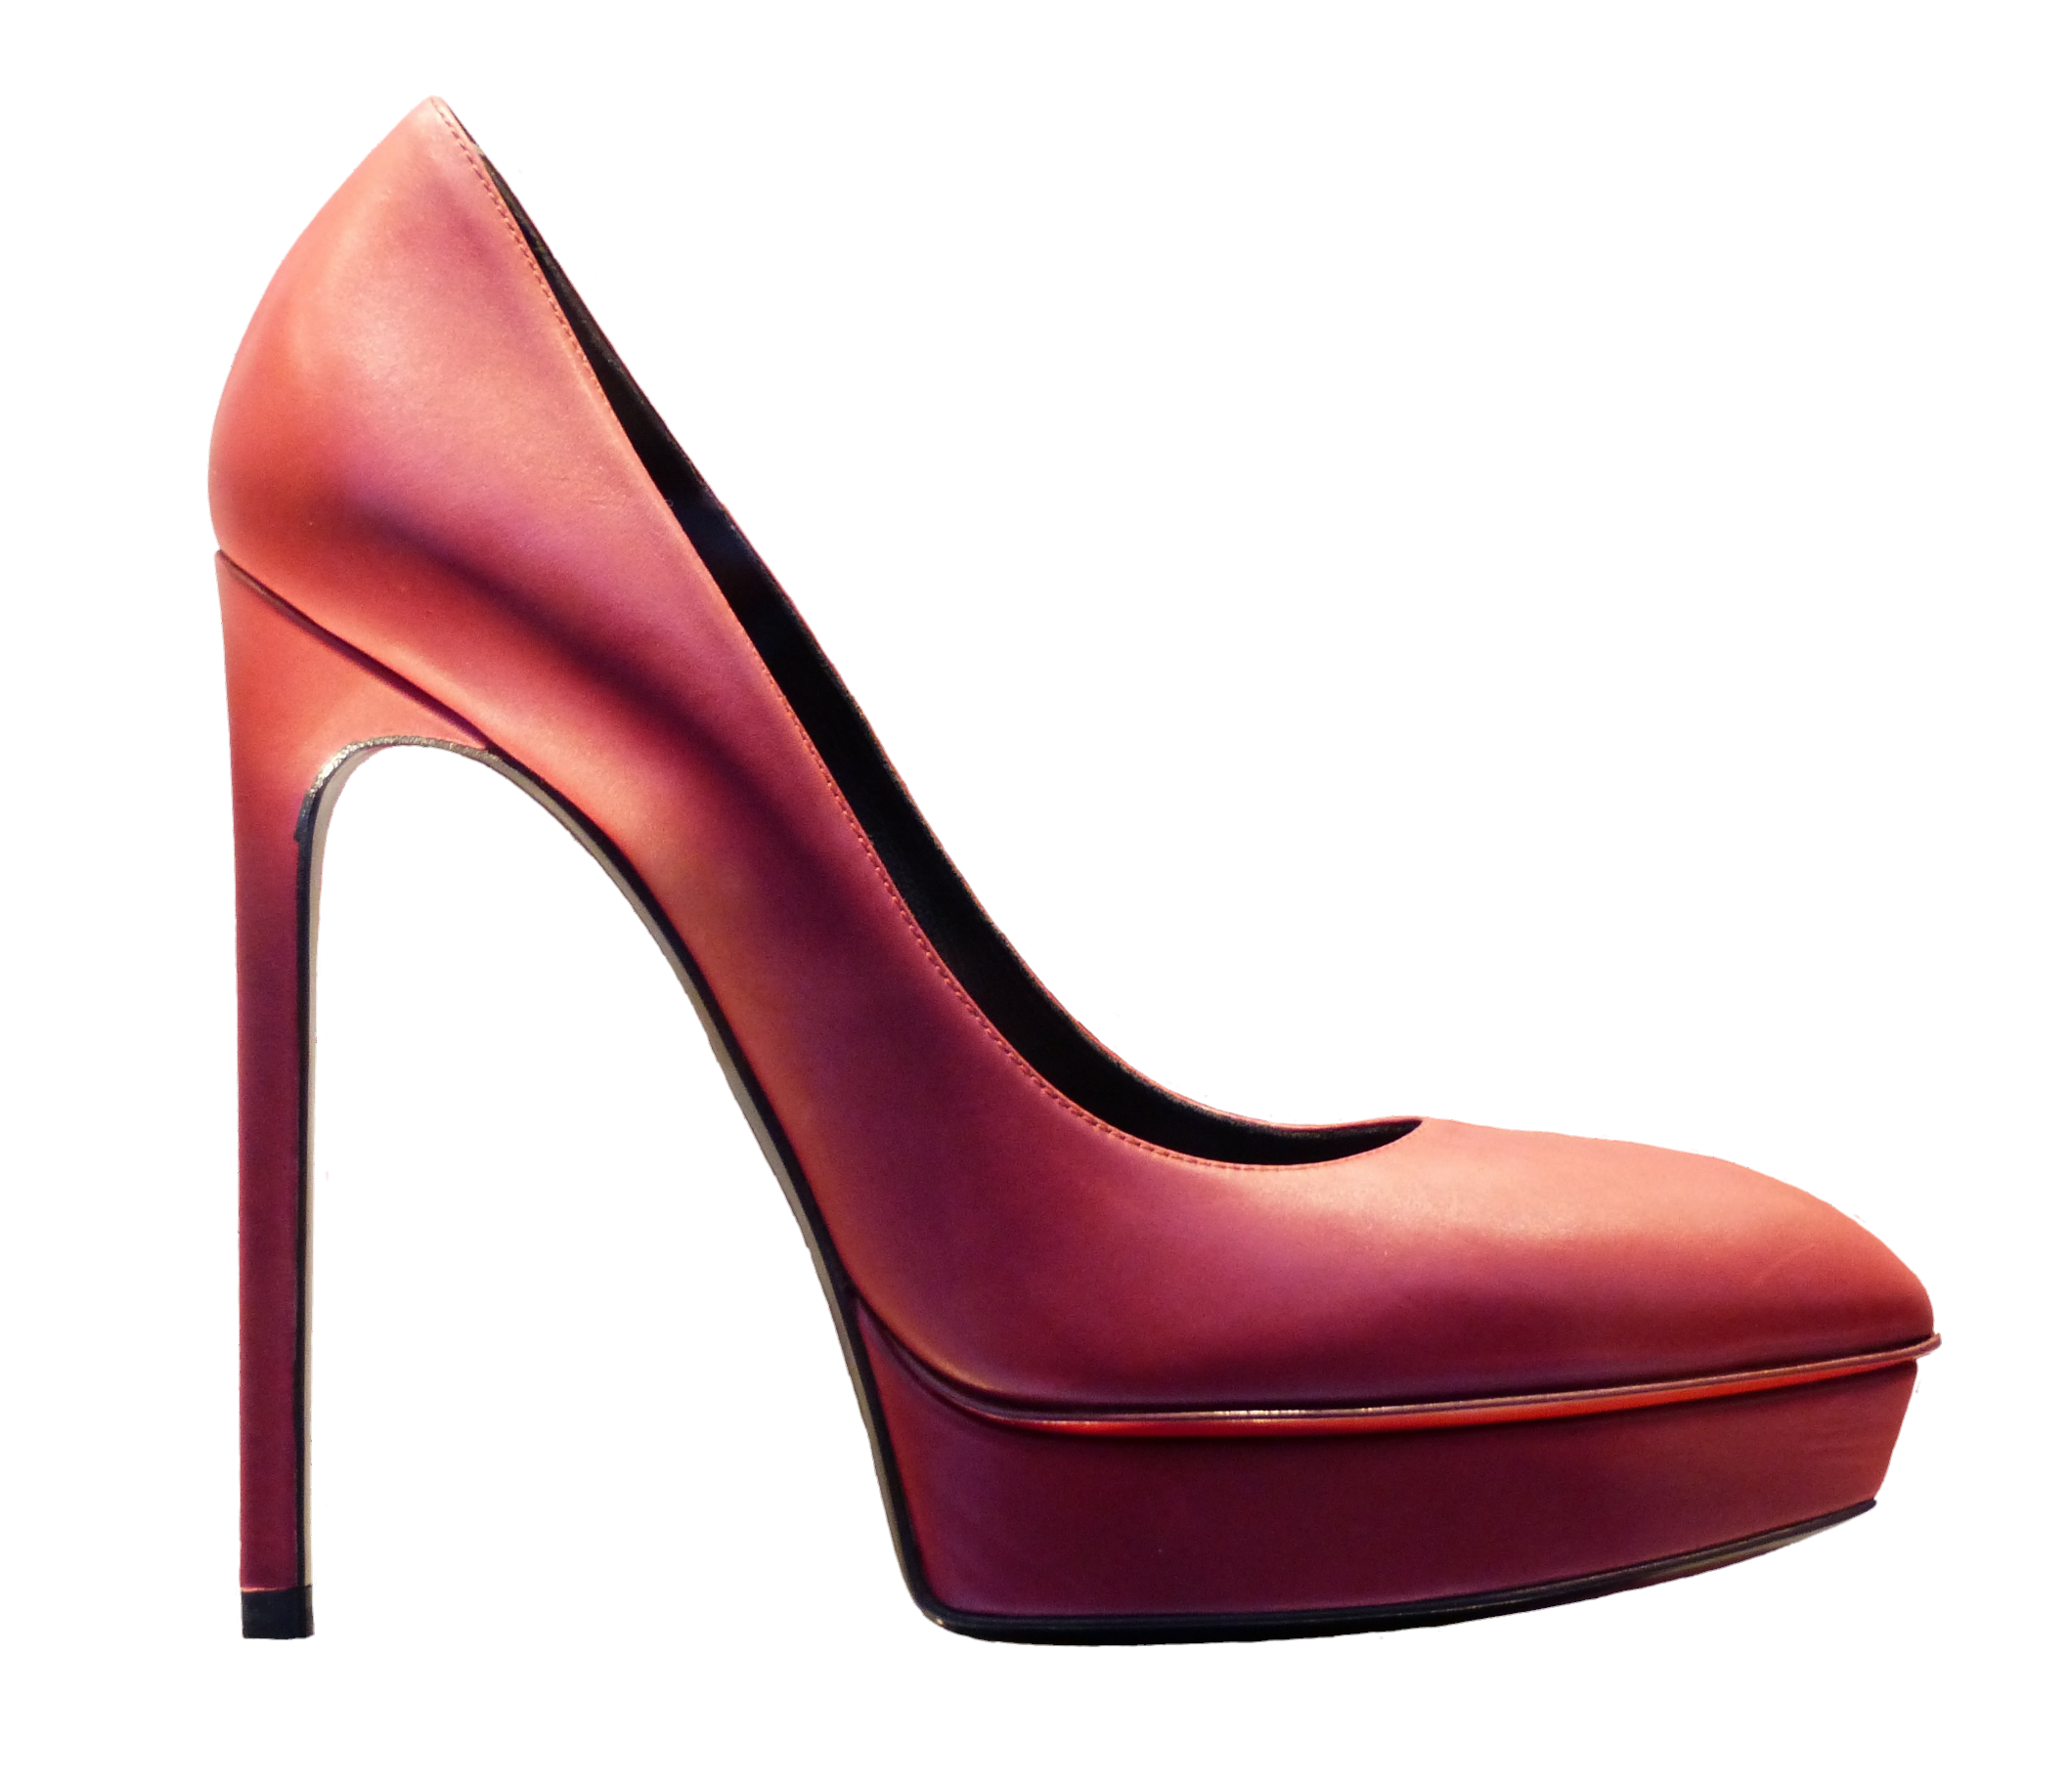 Pink High Heels Shoe Free Download PNG HD PNG Image